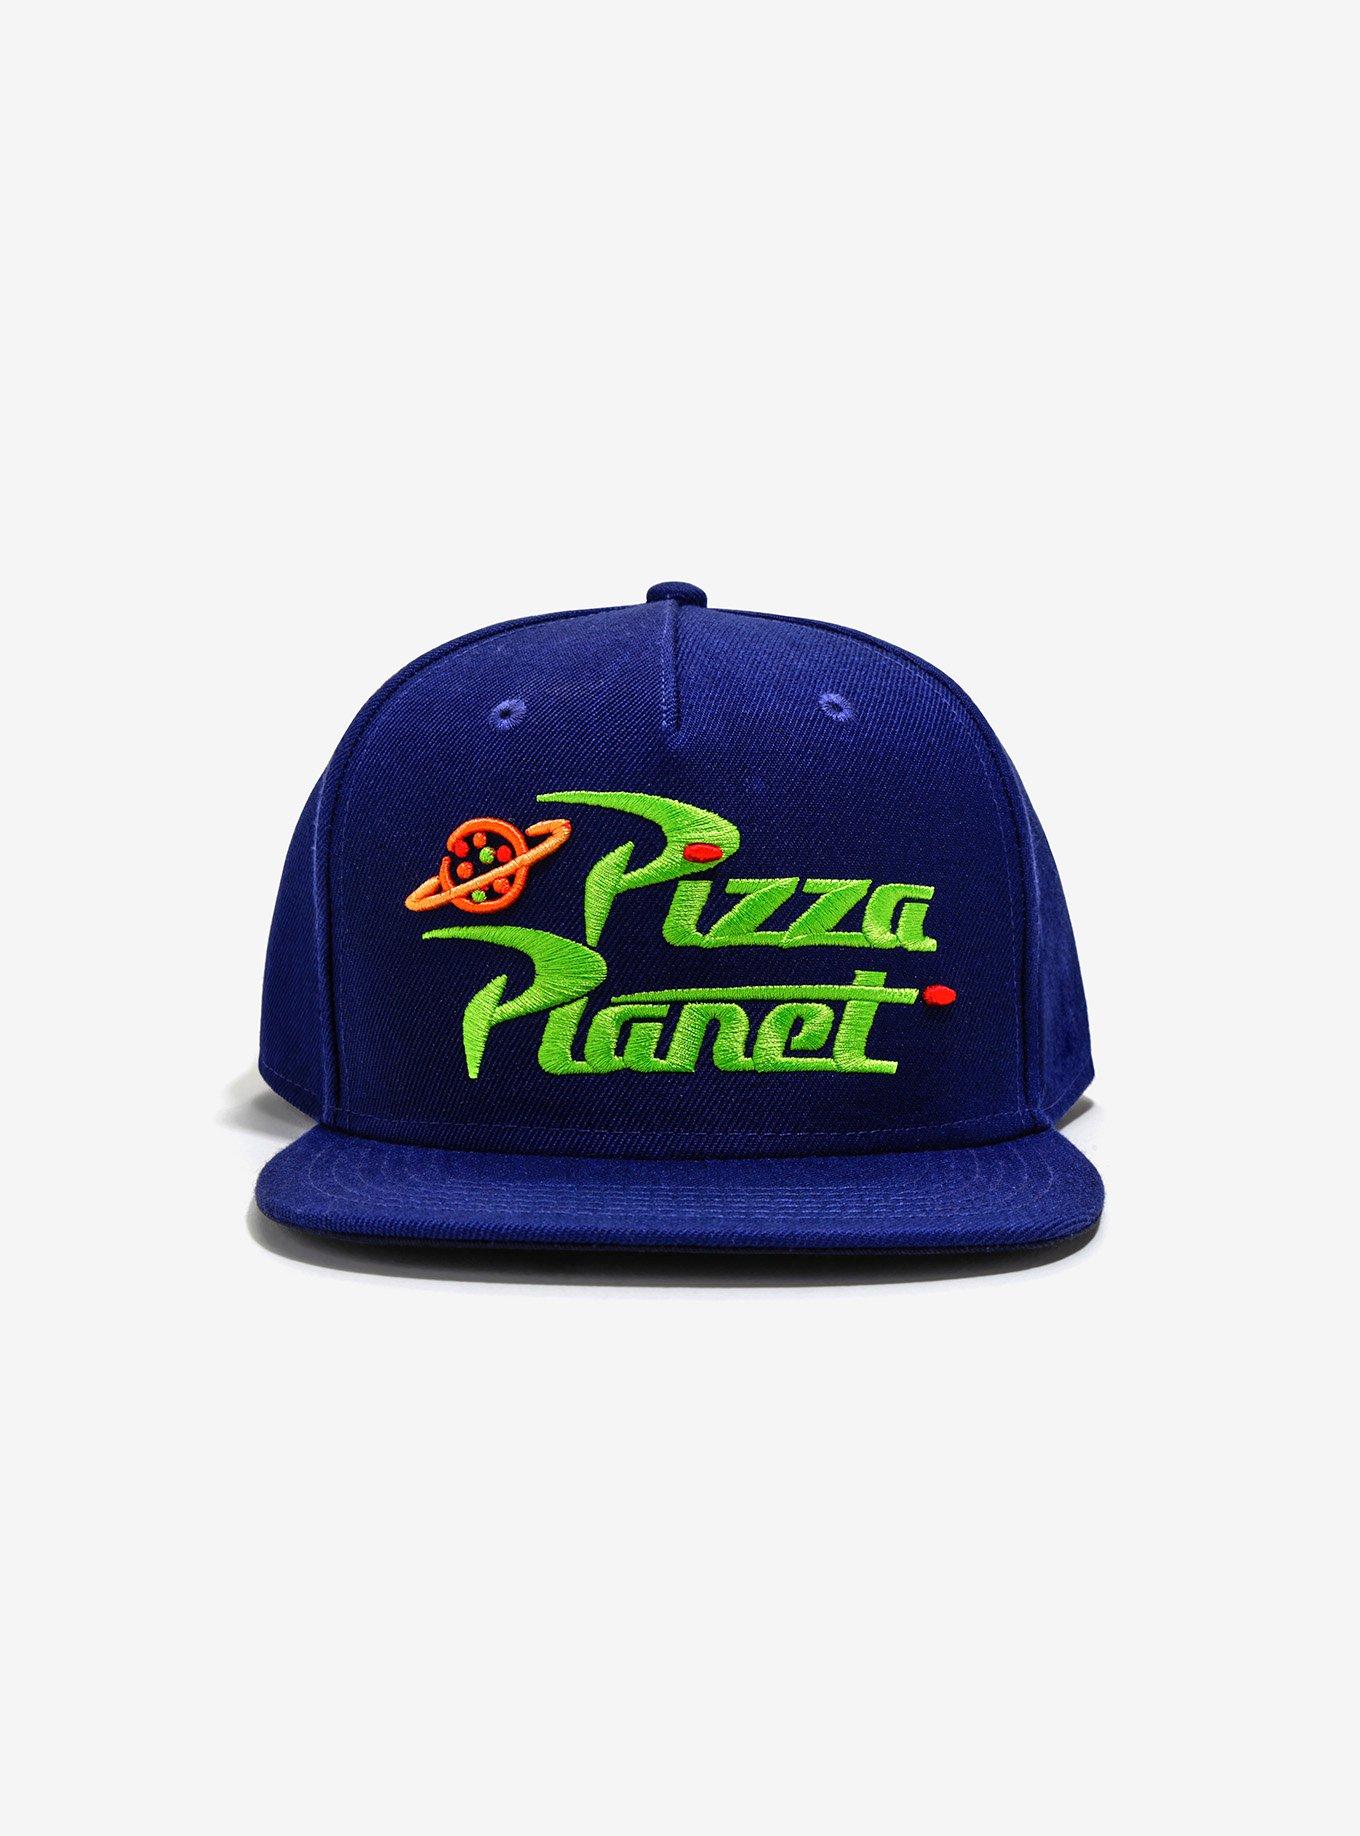 Disney Pixar Toy Story Pizza Planet Snapback Hat, , hi-res